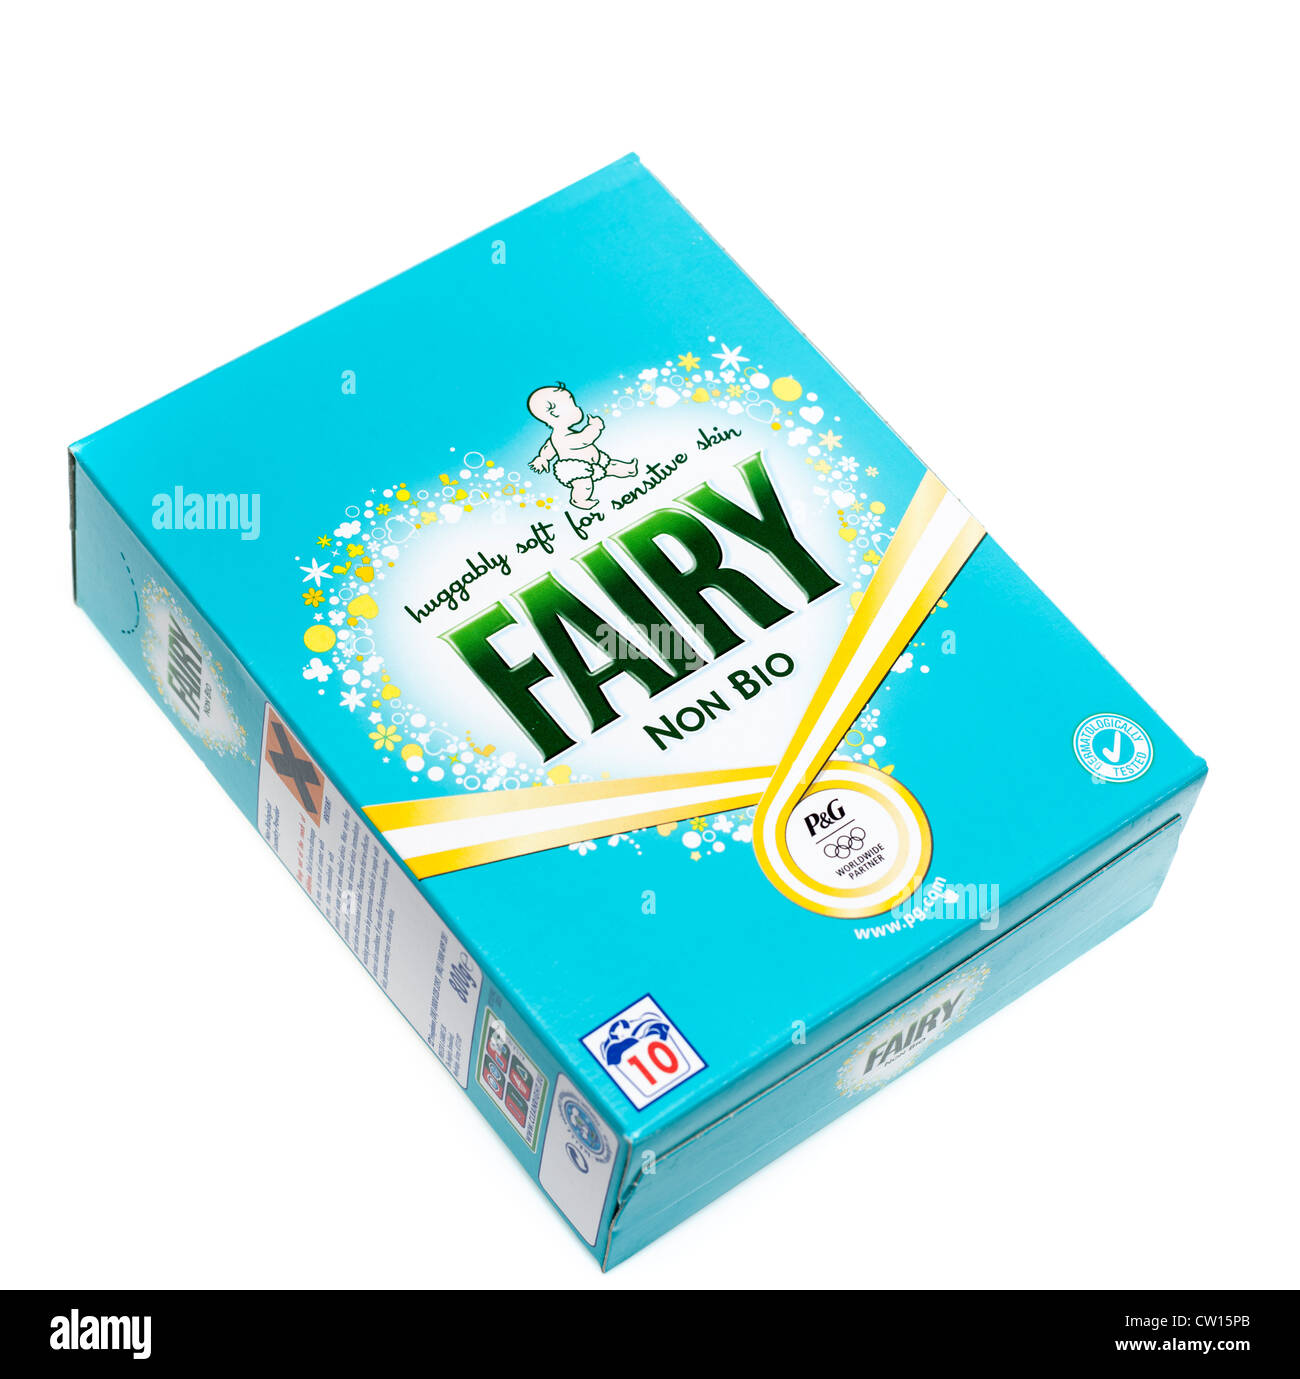 Box of Fairy Non bio washing powder Stock Photo